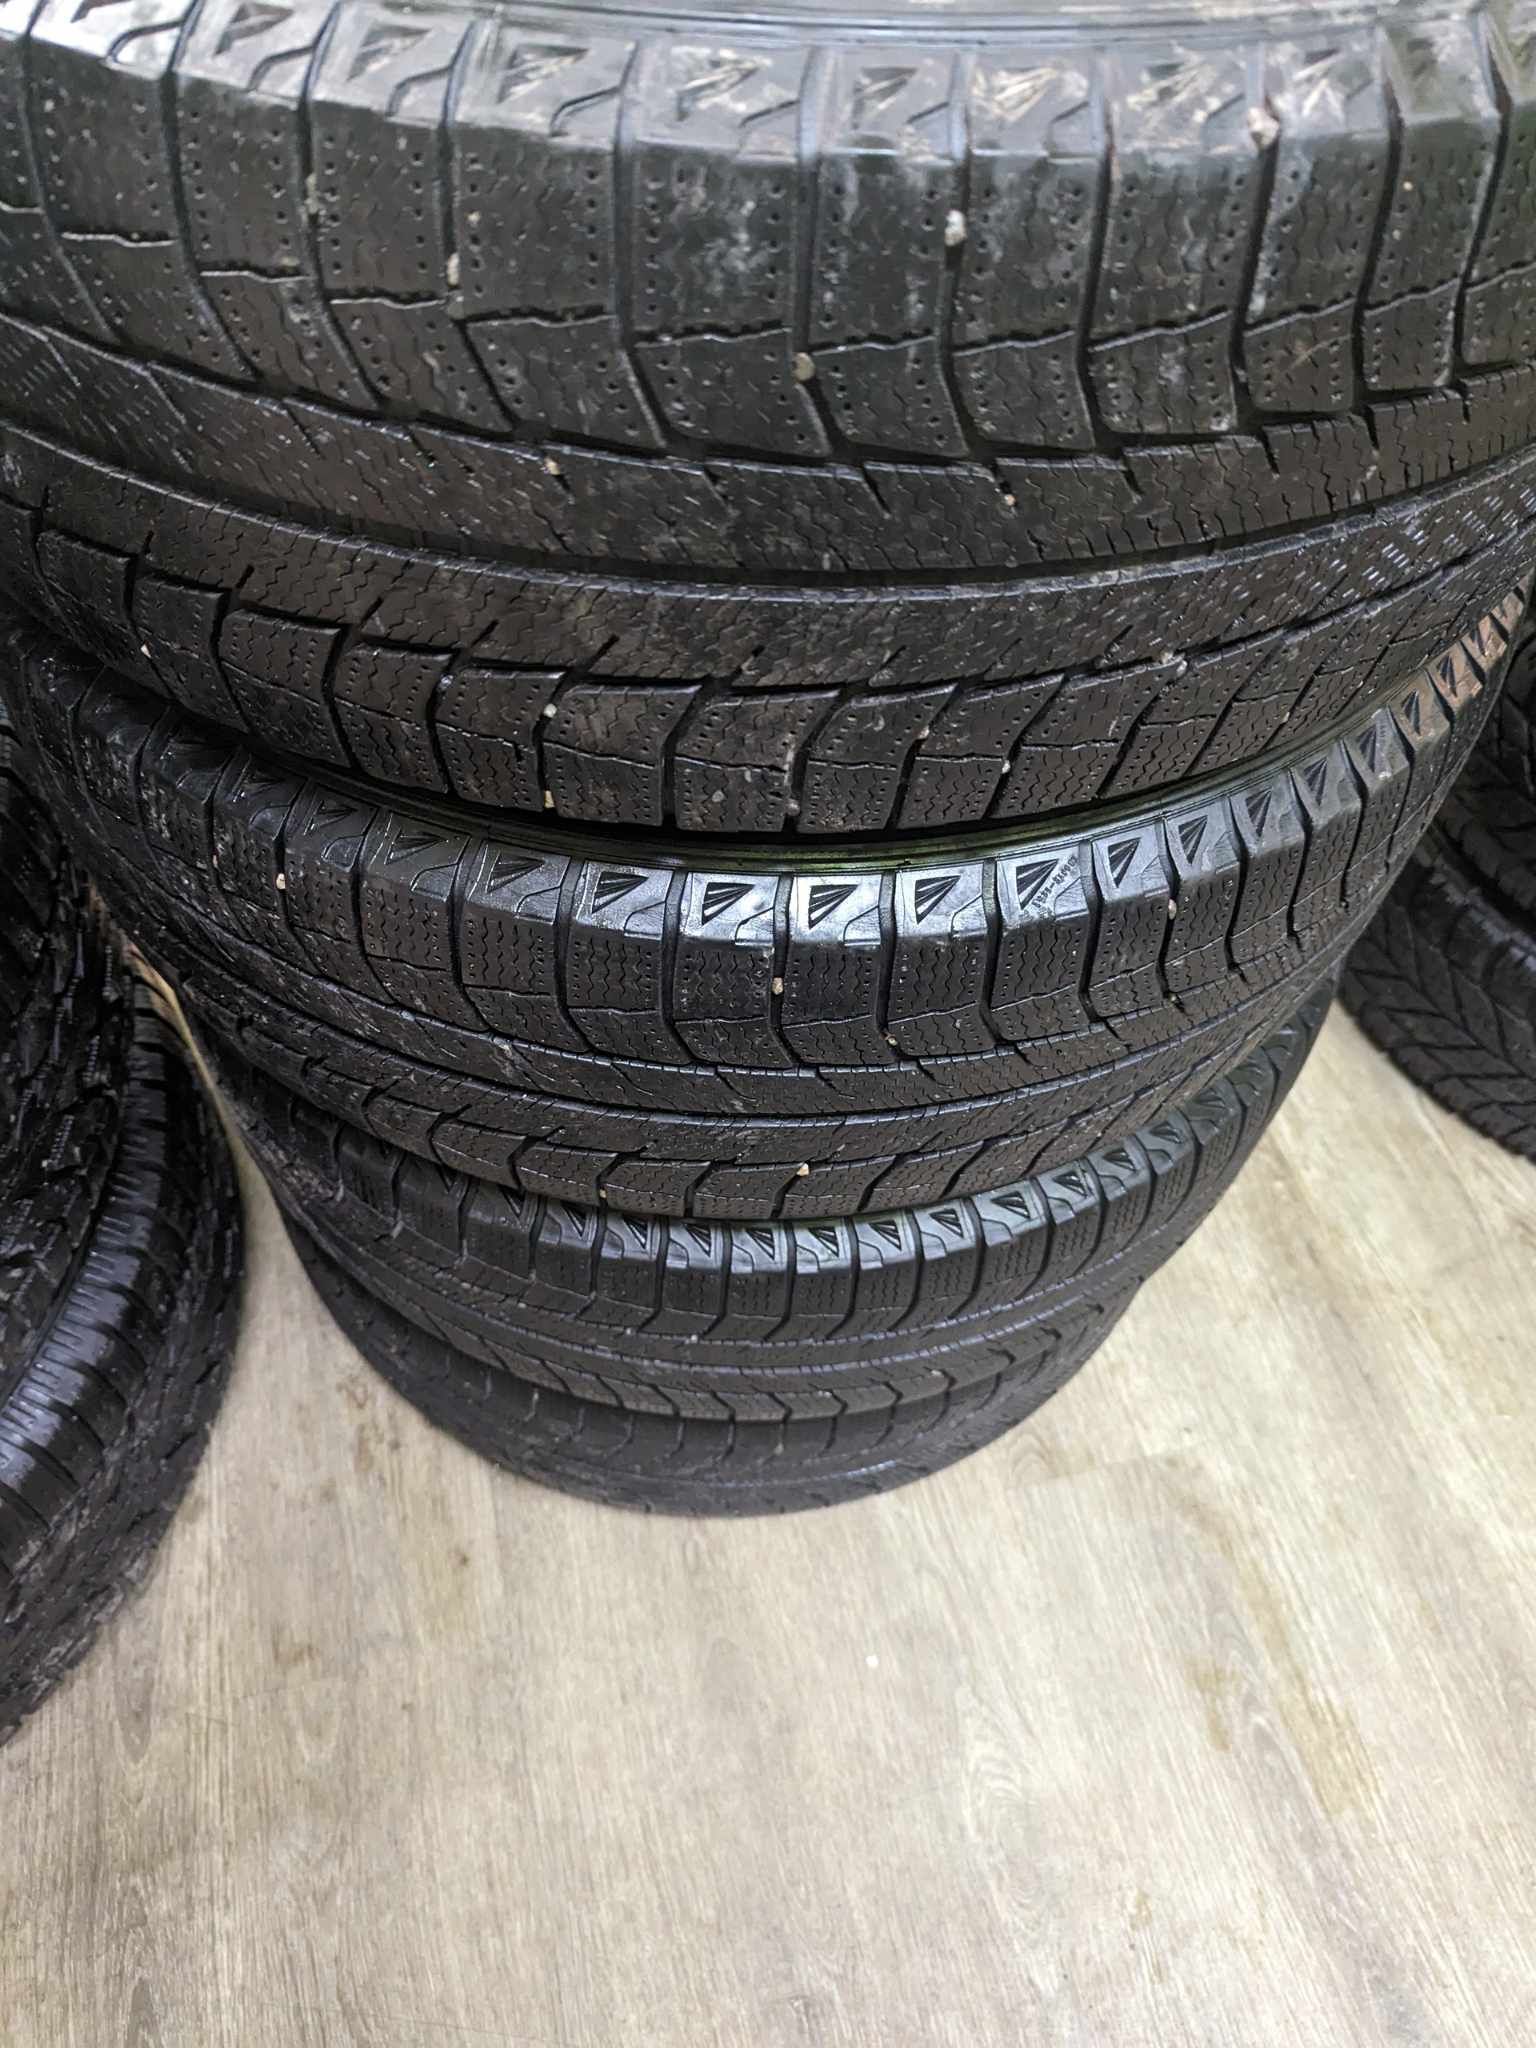 225/65R17 Michelin Snow Tires on Hyundai Rims